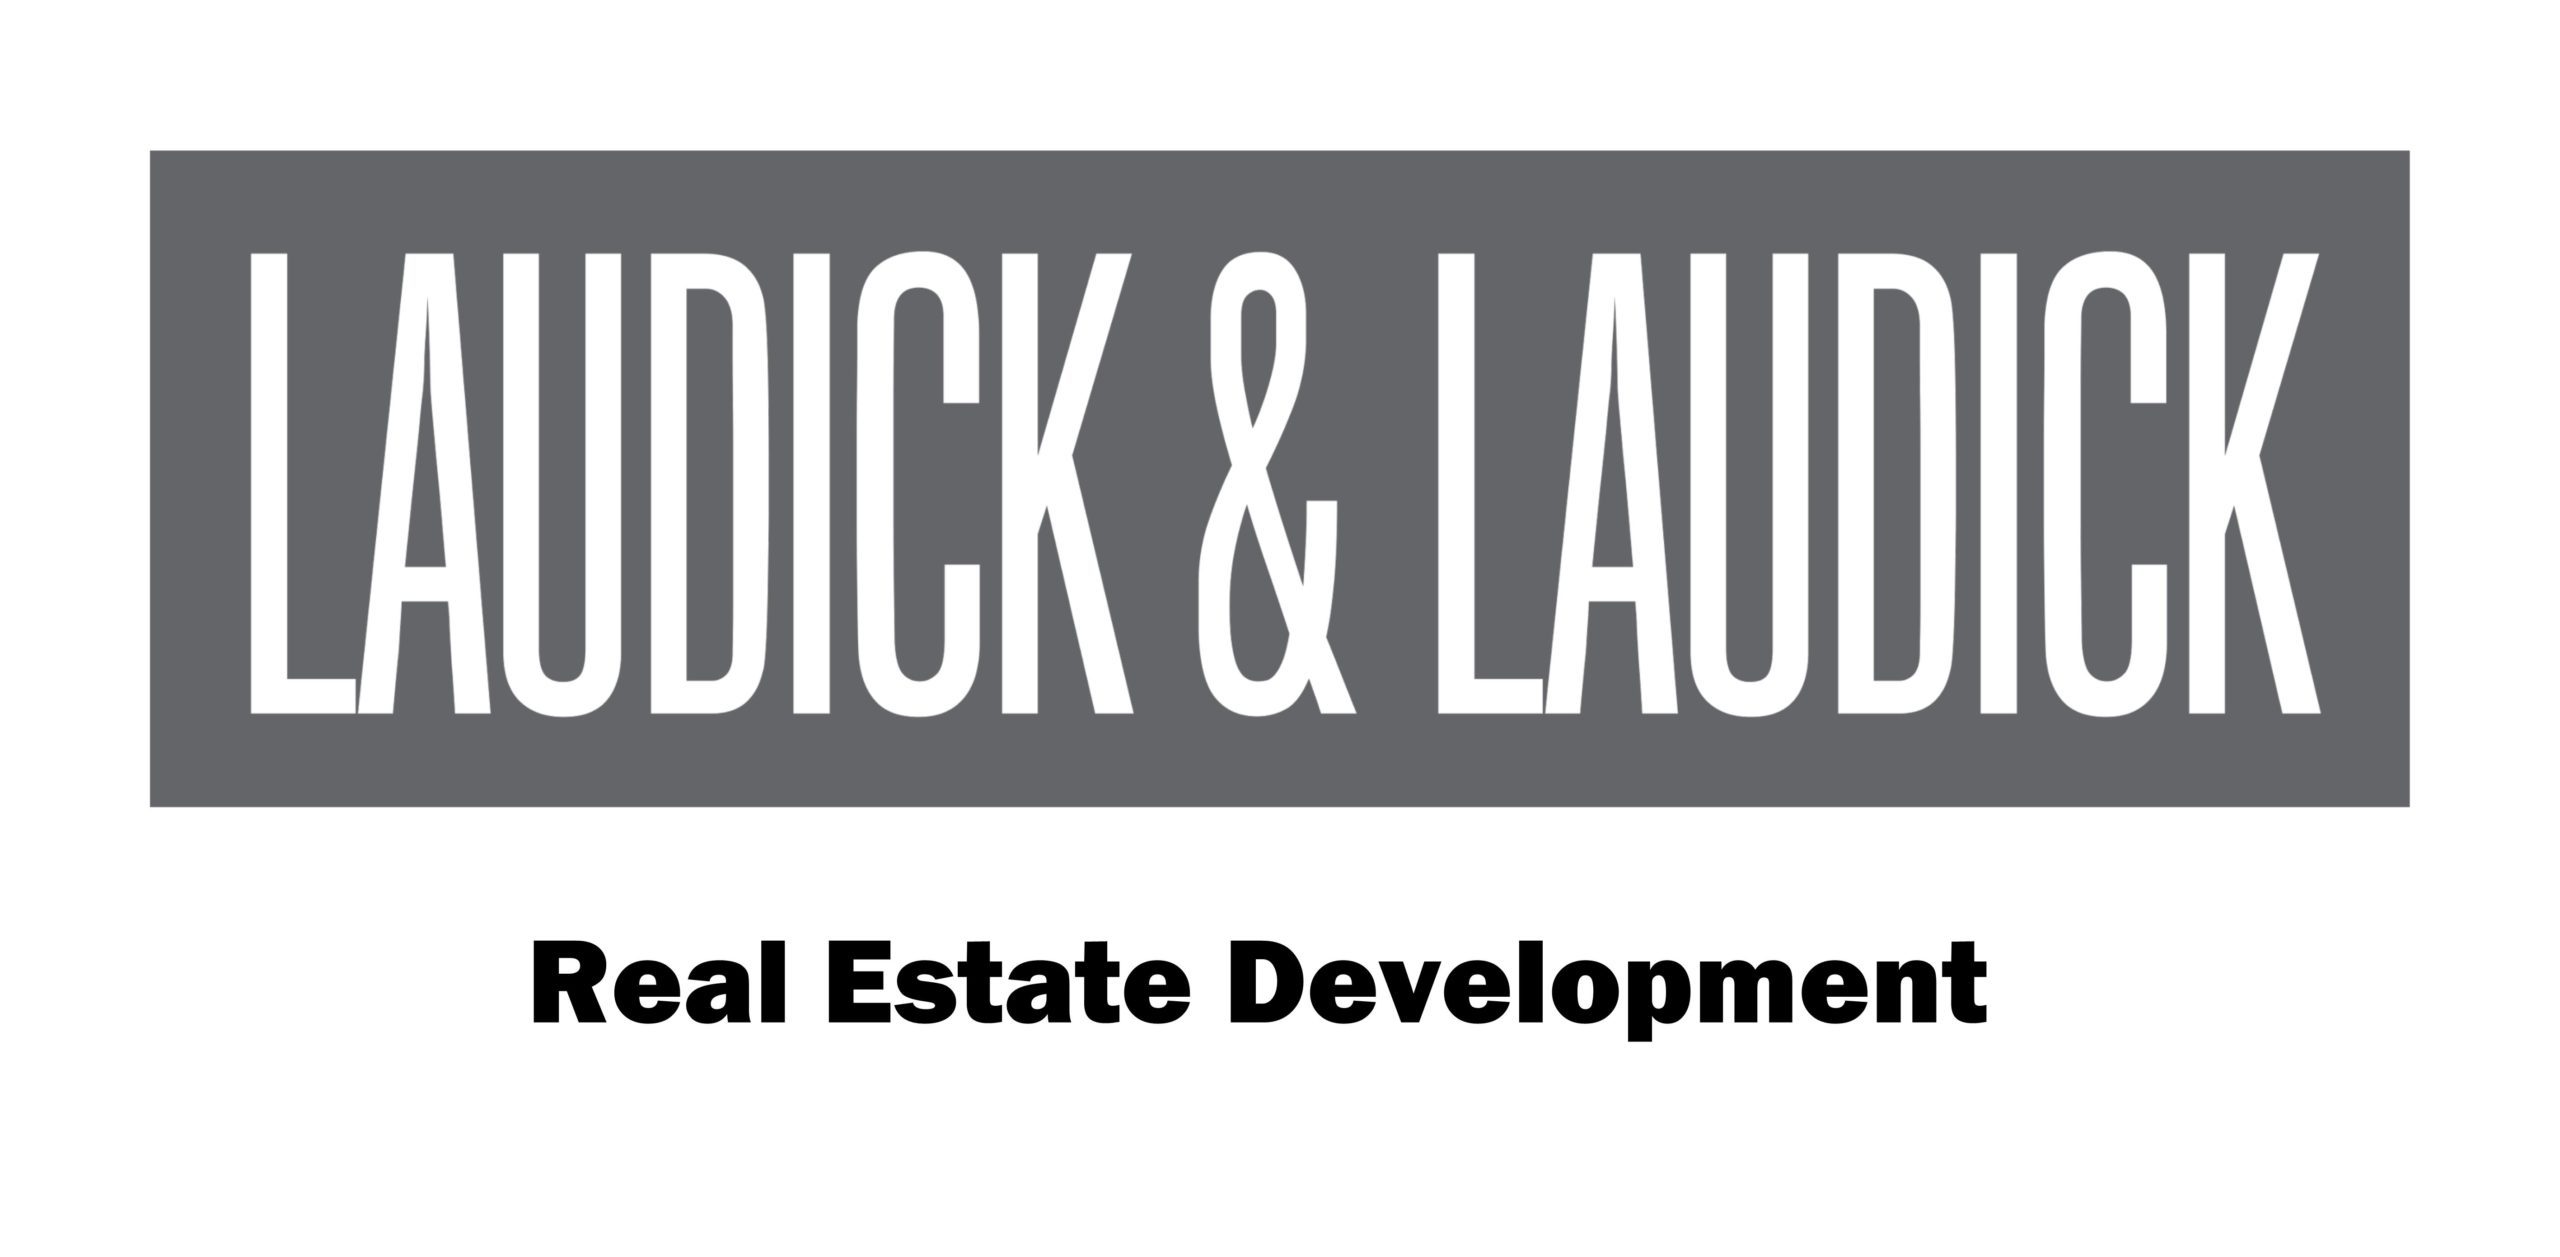 Laudick & Laudick Engineering, LLC